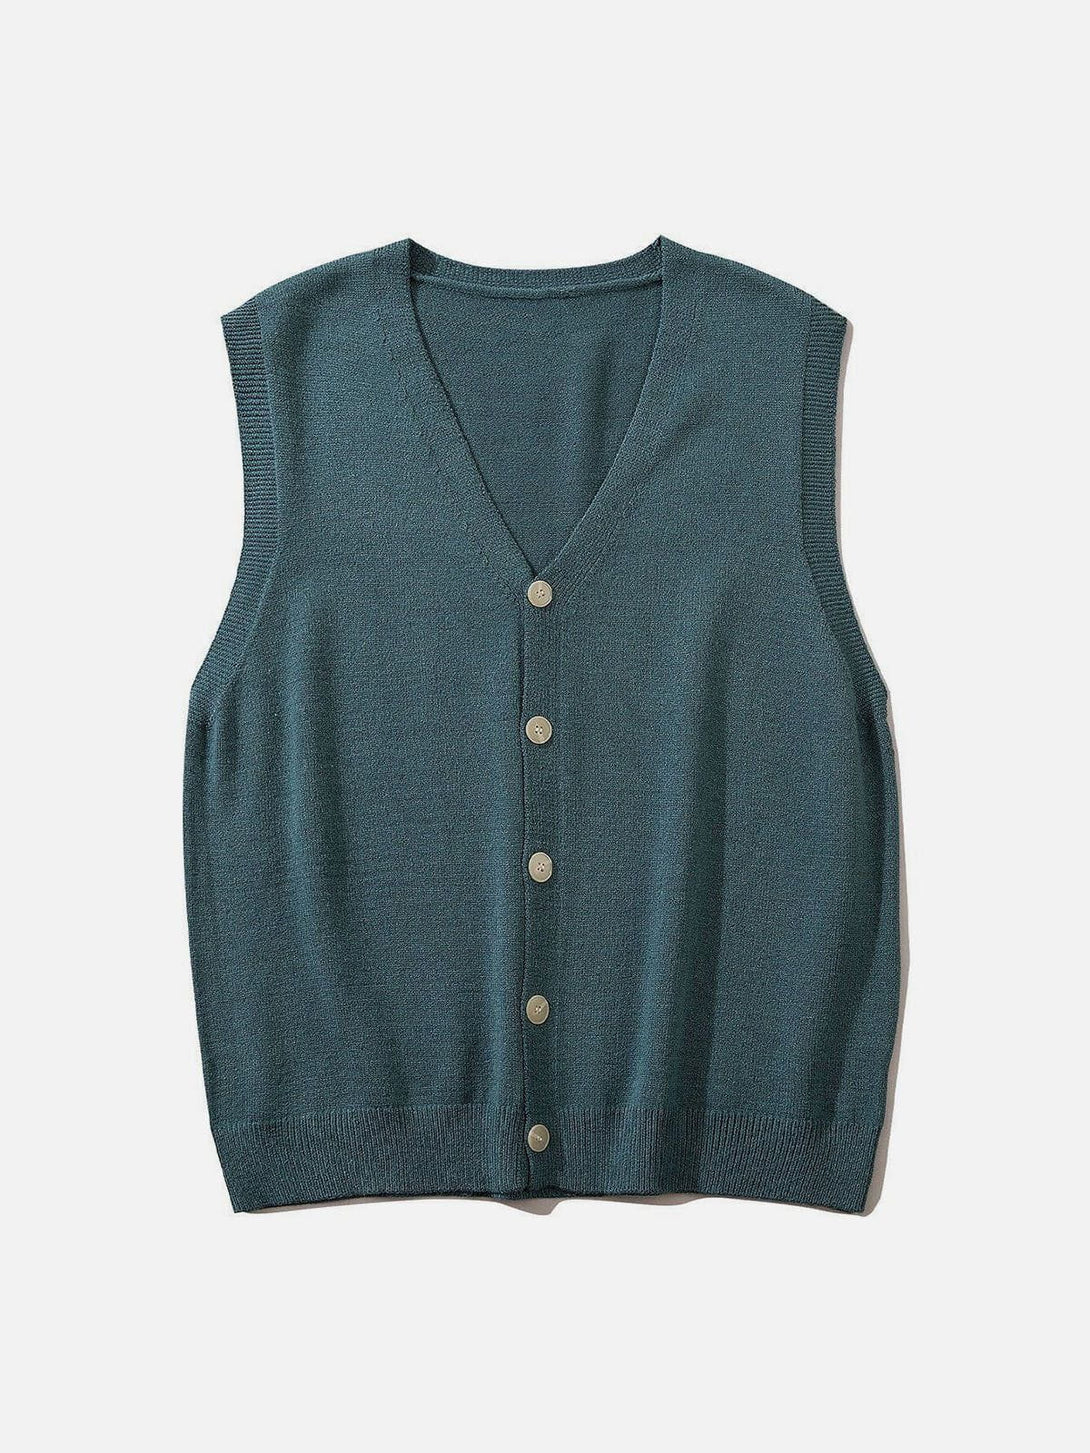 AlanBalen® - Simple Solid Color Sweater Vest AlanBalen